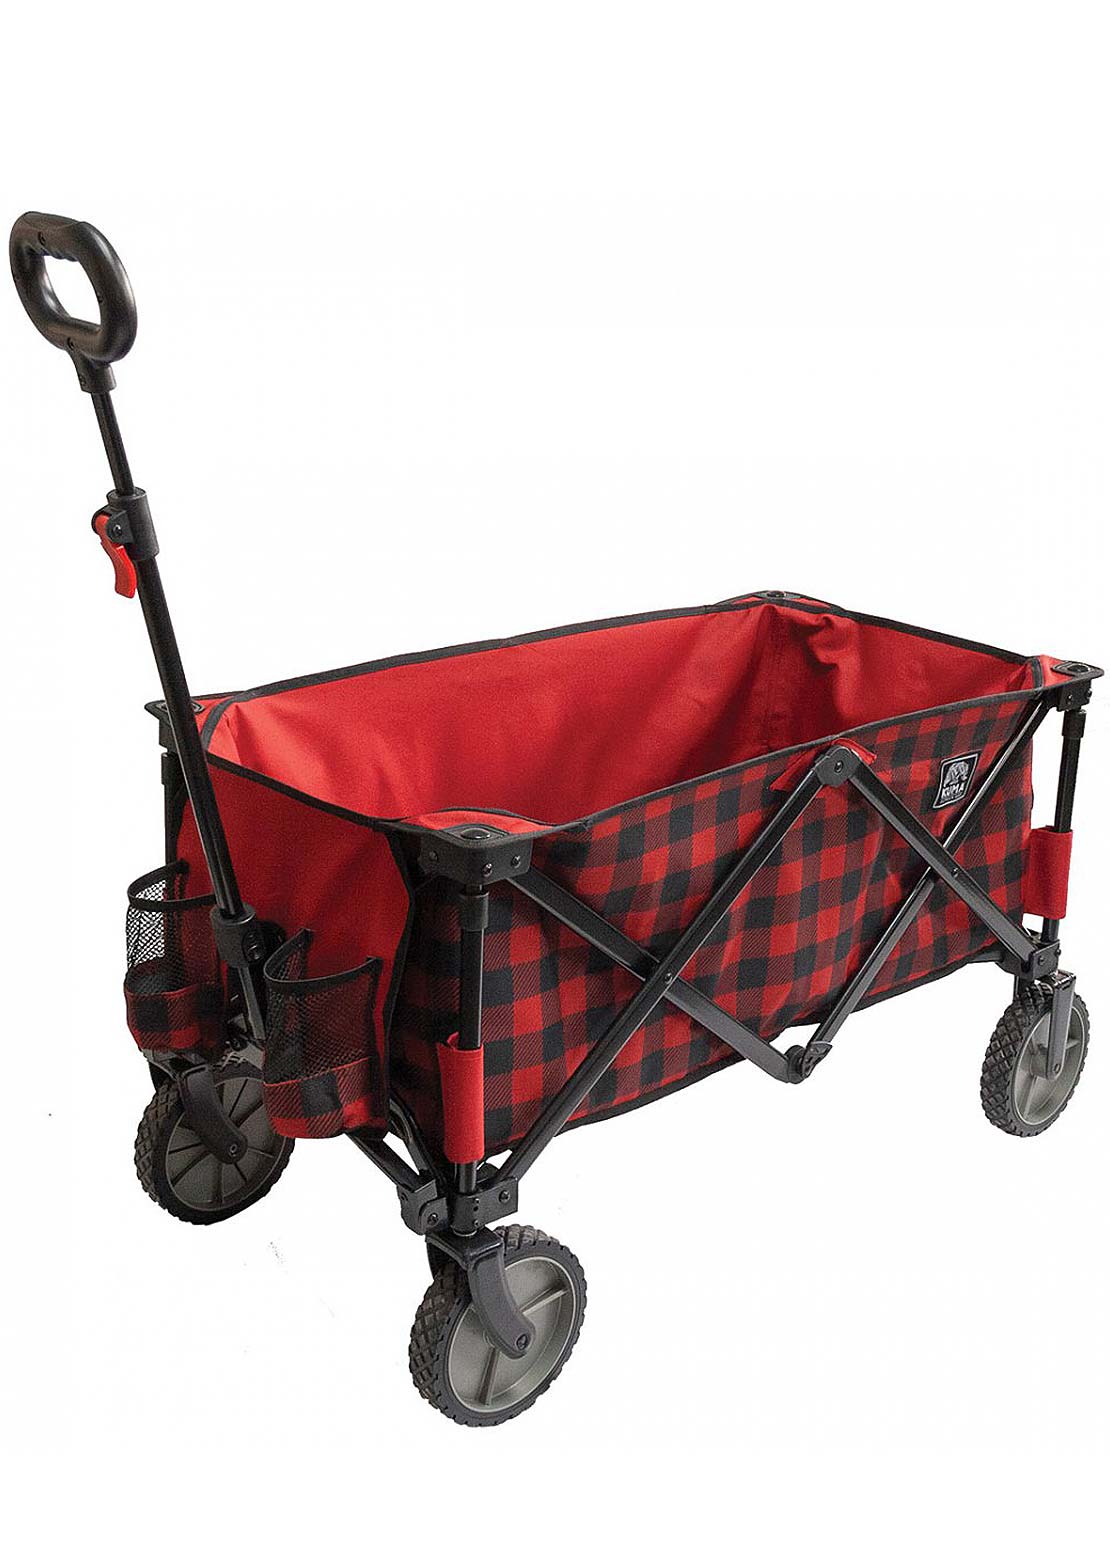 Kuma Outdoor Gear Bear Buggy (Cart)